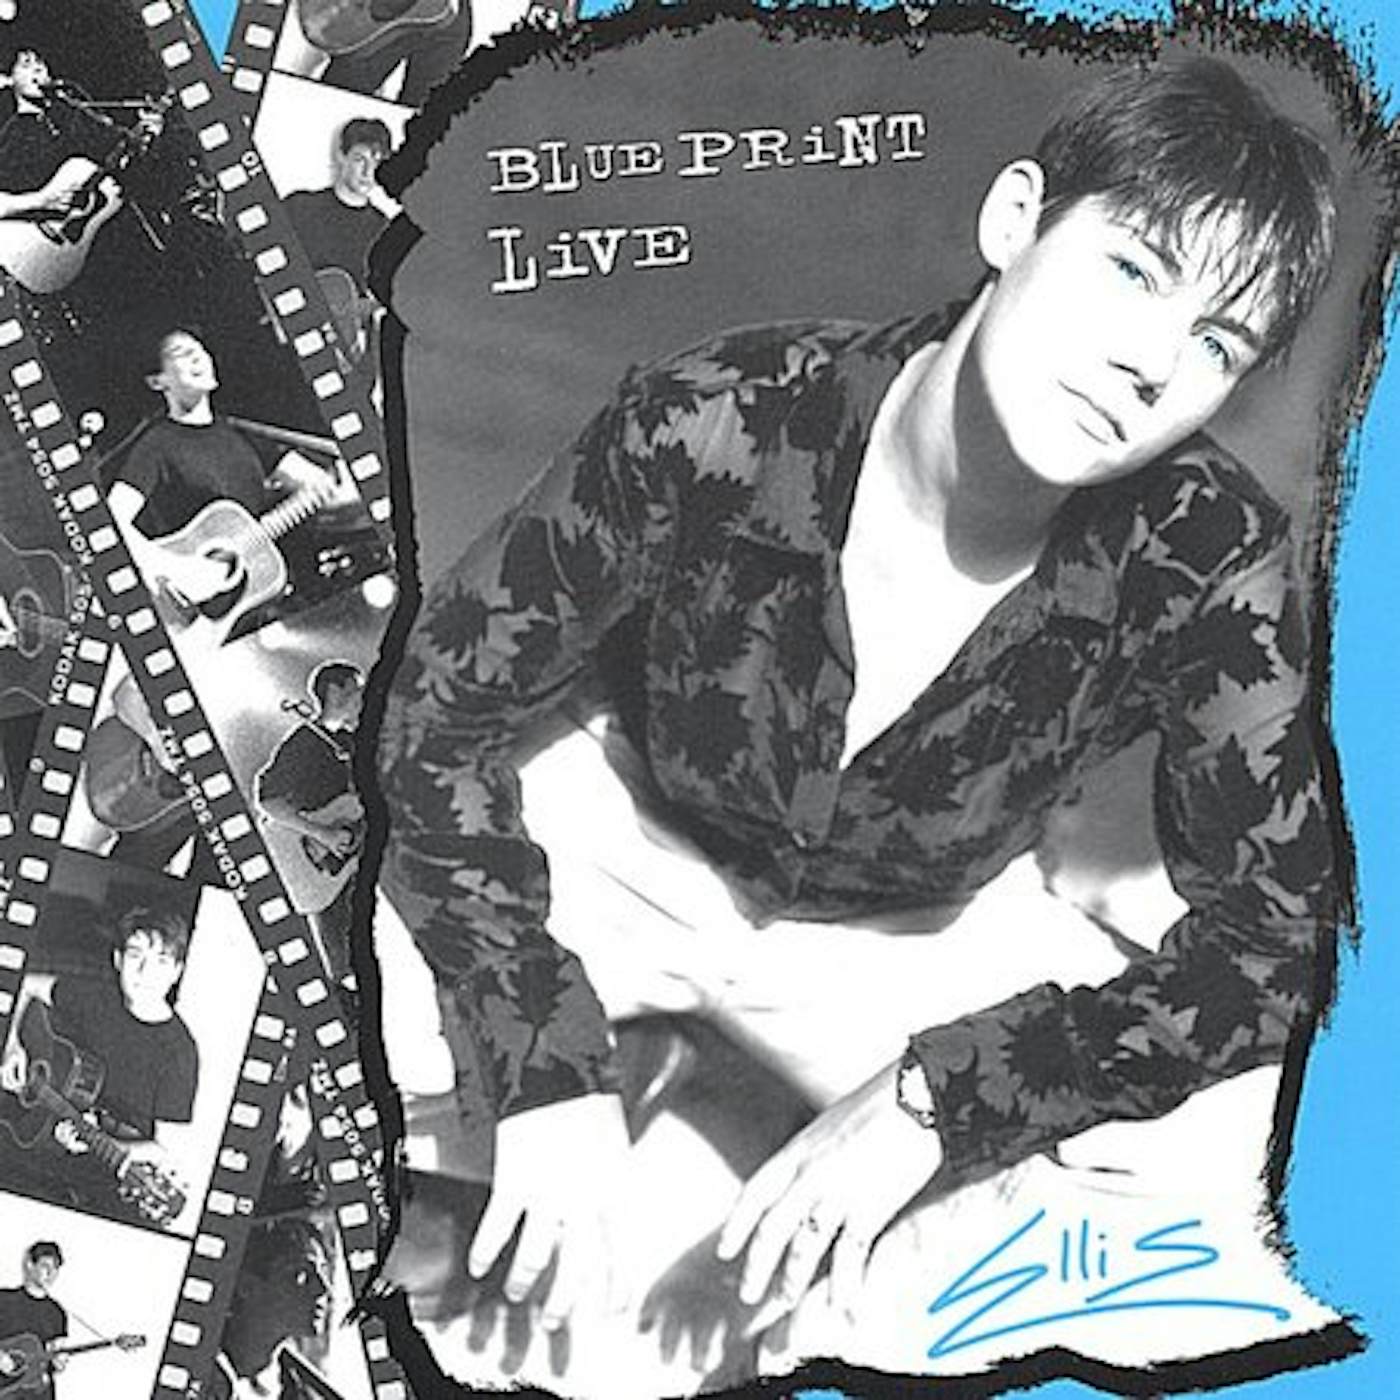 ellis BLUE PRINT LIVE CD